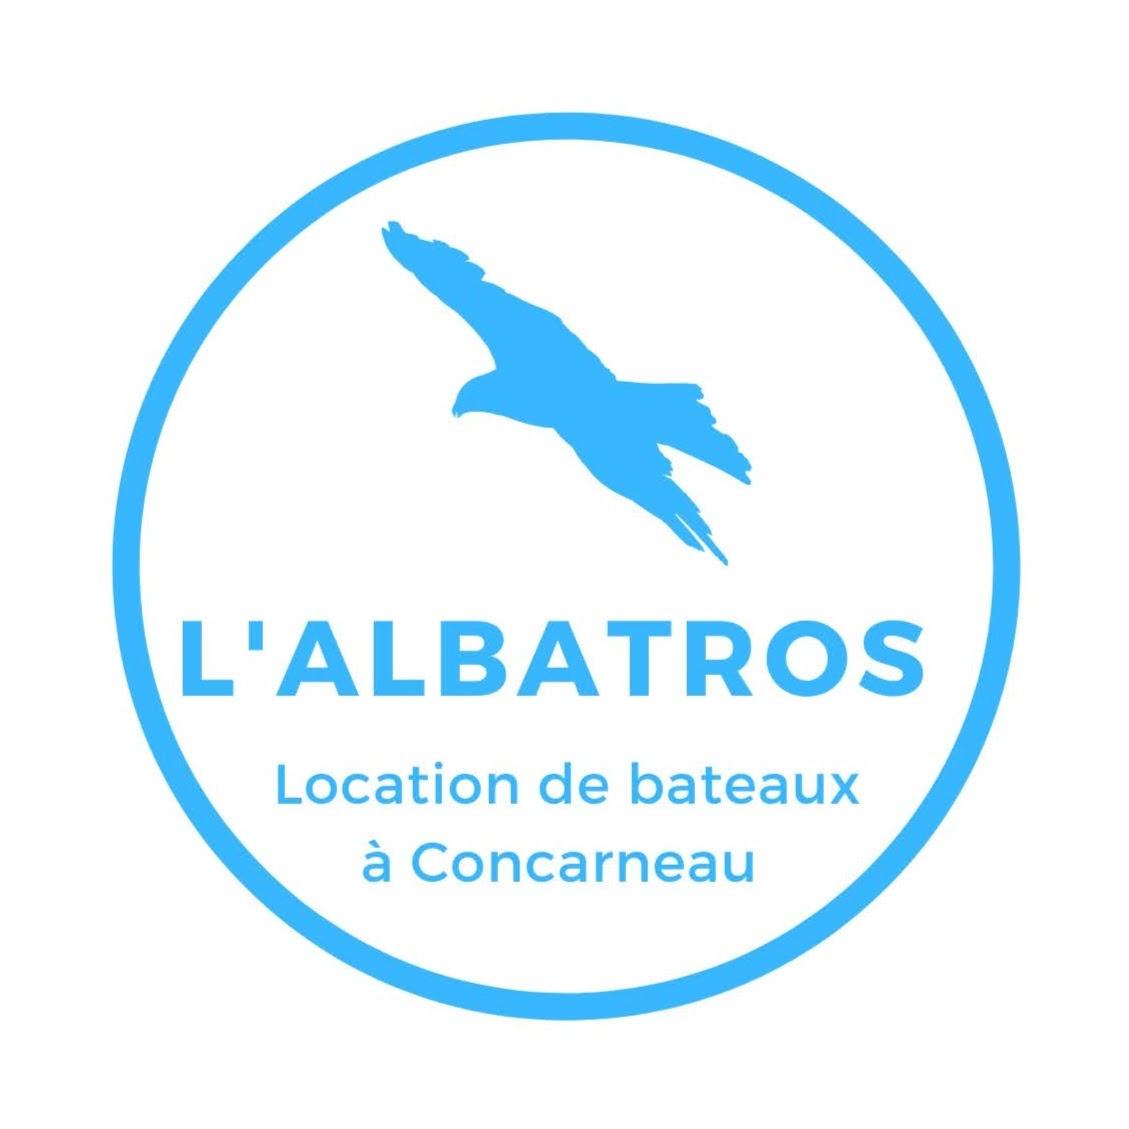 L'albatros Sarl - Location Bateau Concarneau Concarneau